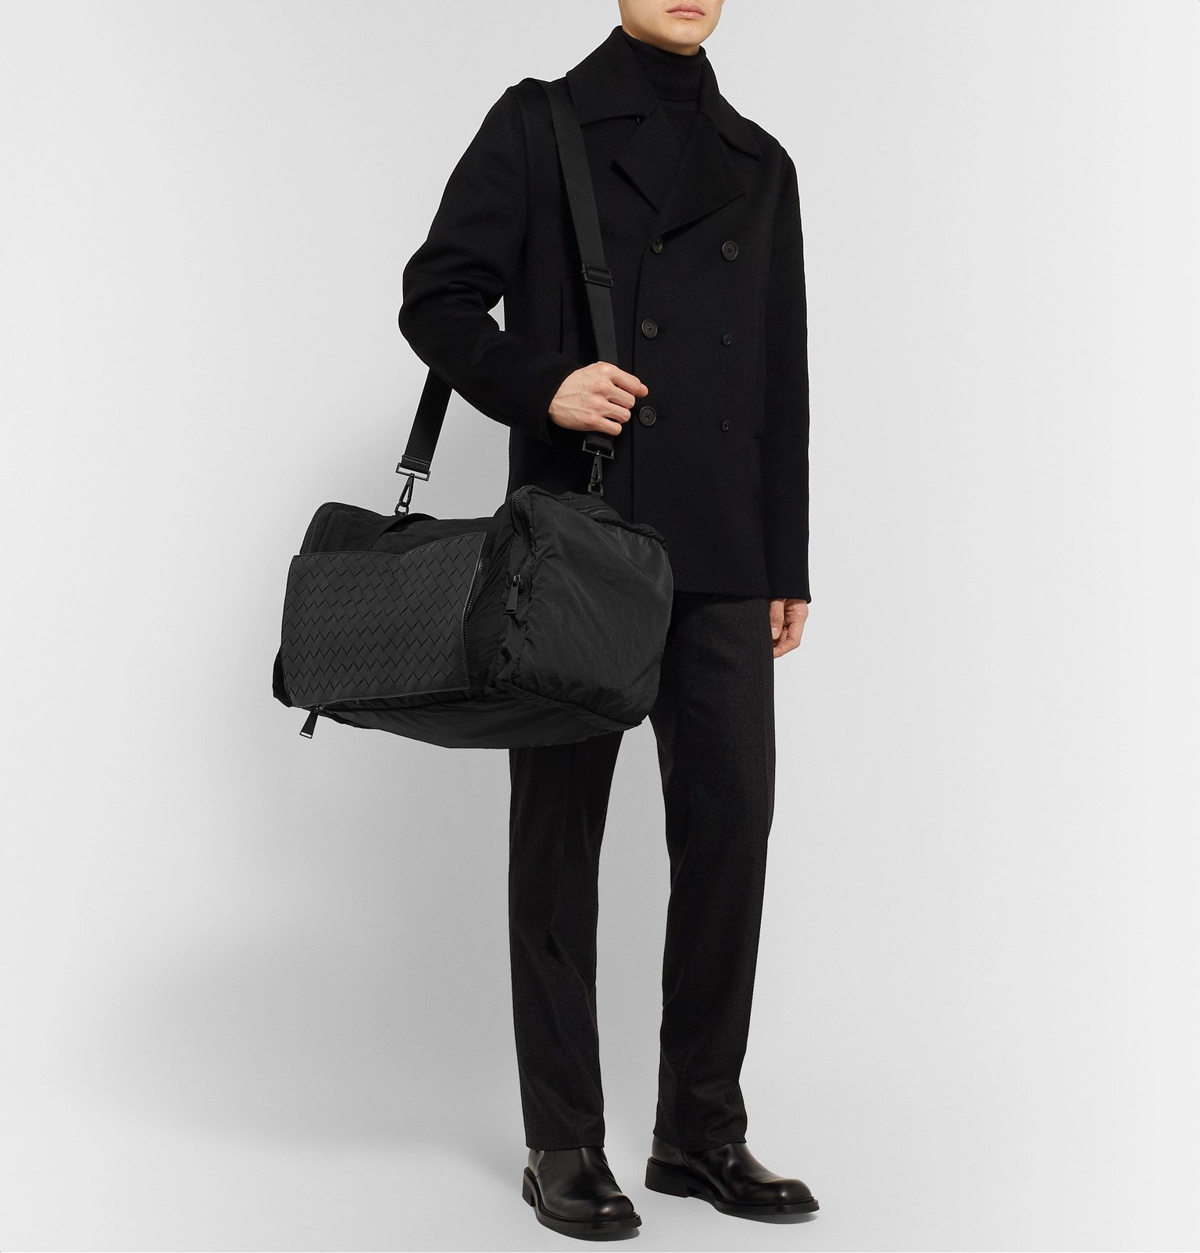 Bottega Veneta Black Leather Intrecciato Duffle Bag worn by Travis